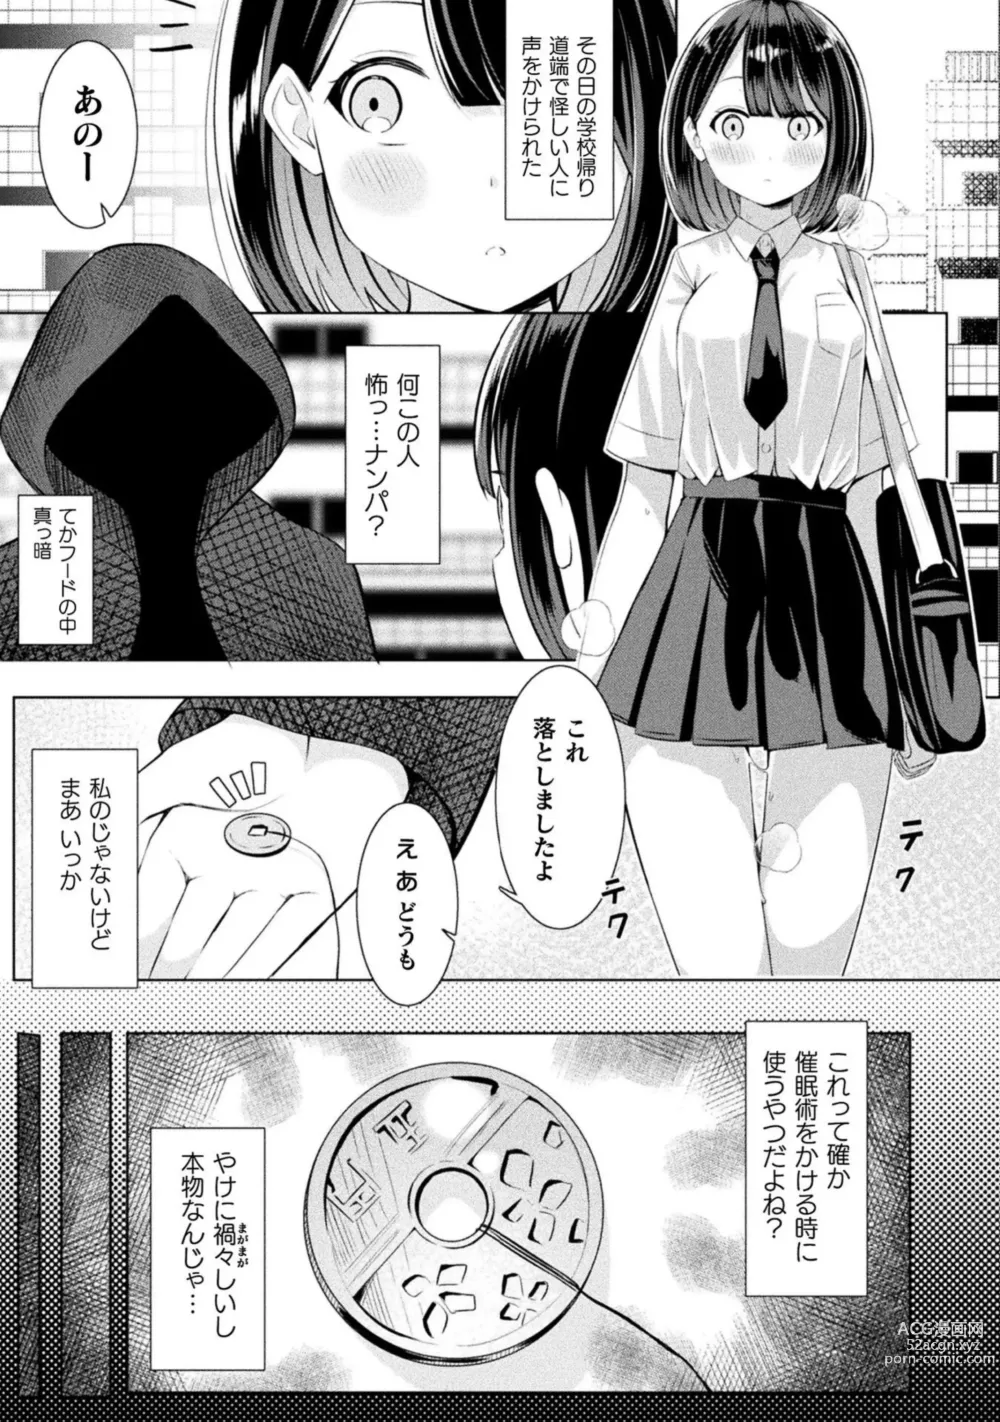 Page 67 of manga Bessatsu Comic Unreal Wakarase Yuri Hen Vol. 2